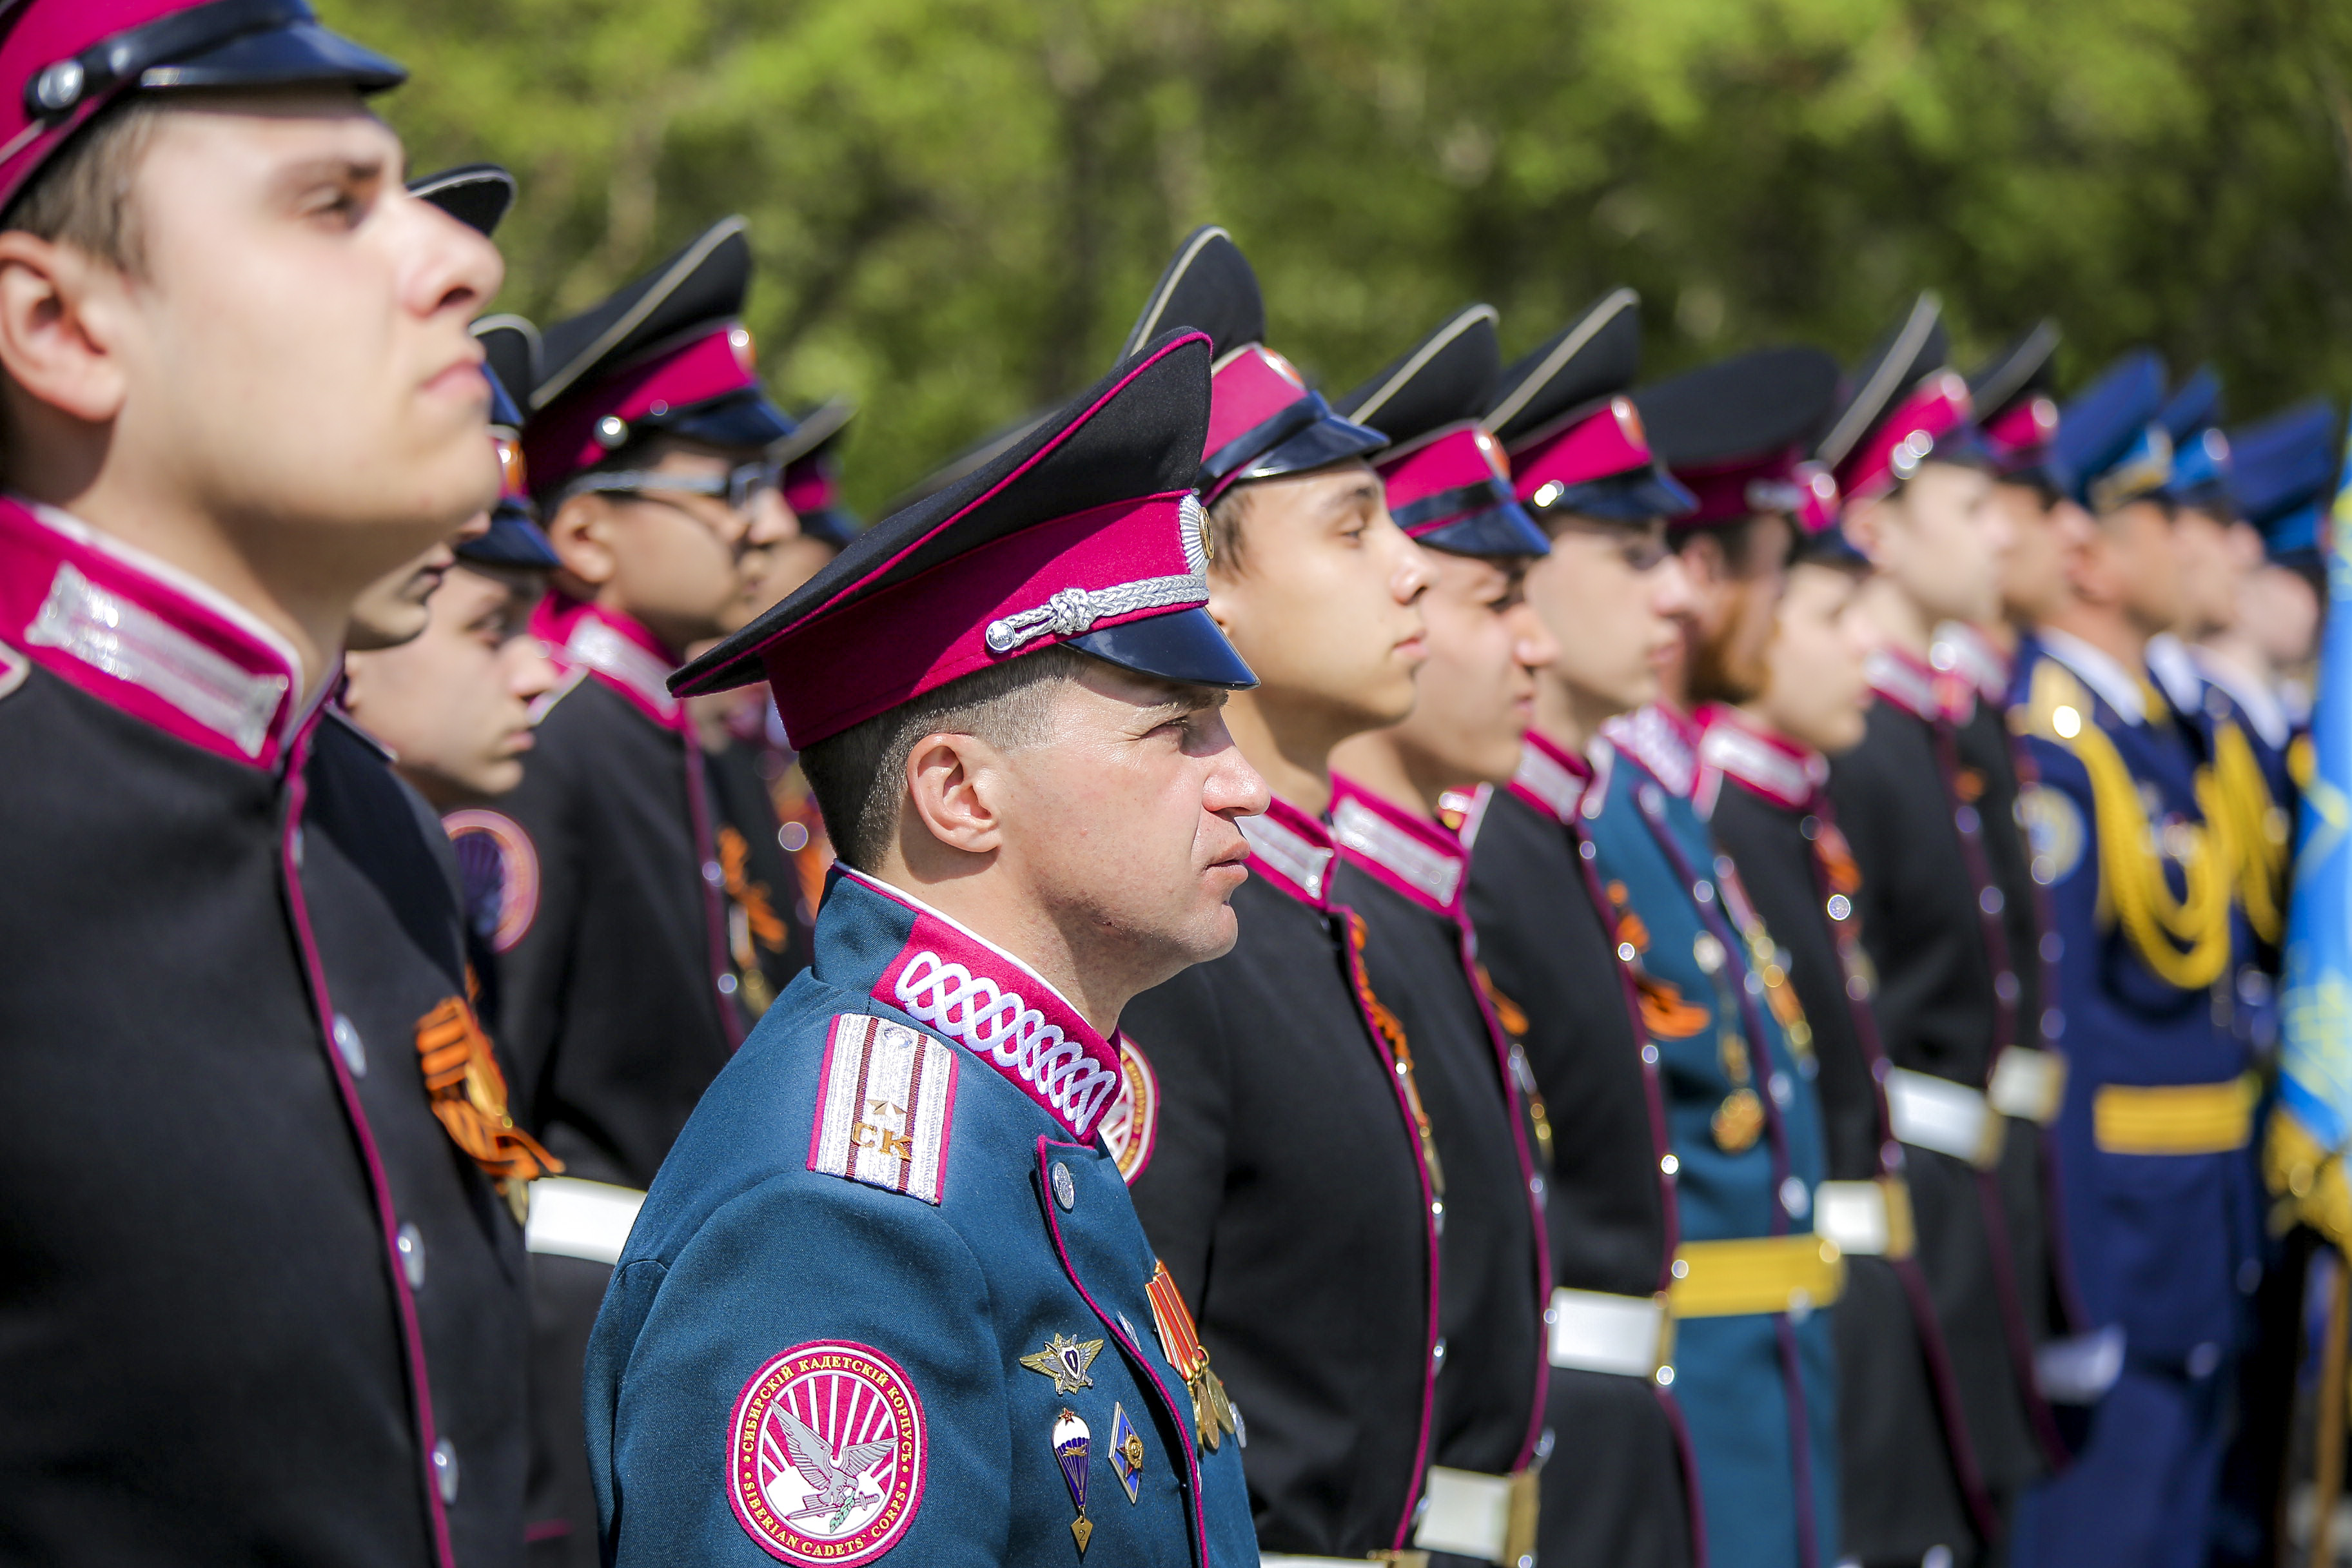 Сибирский кадетский корпус новосибирск фото